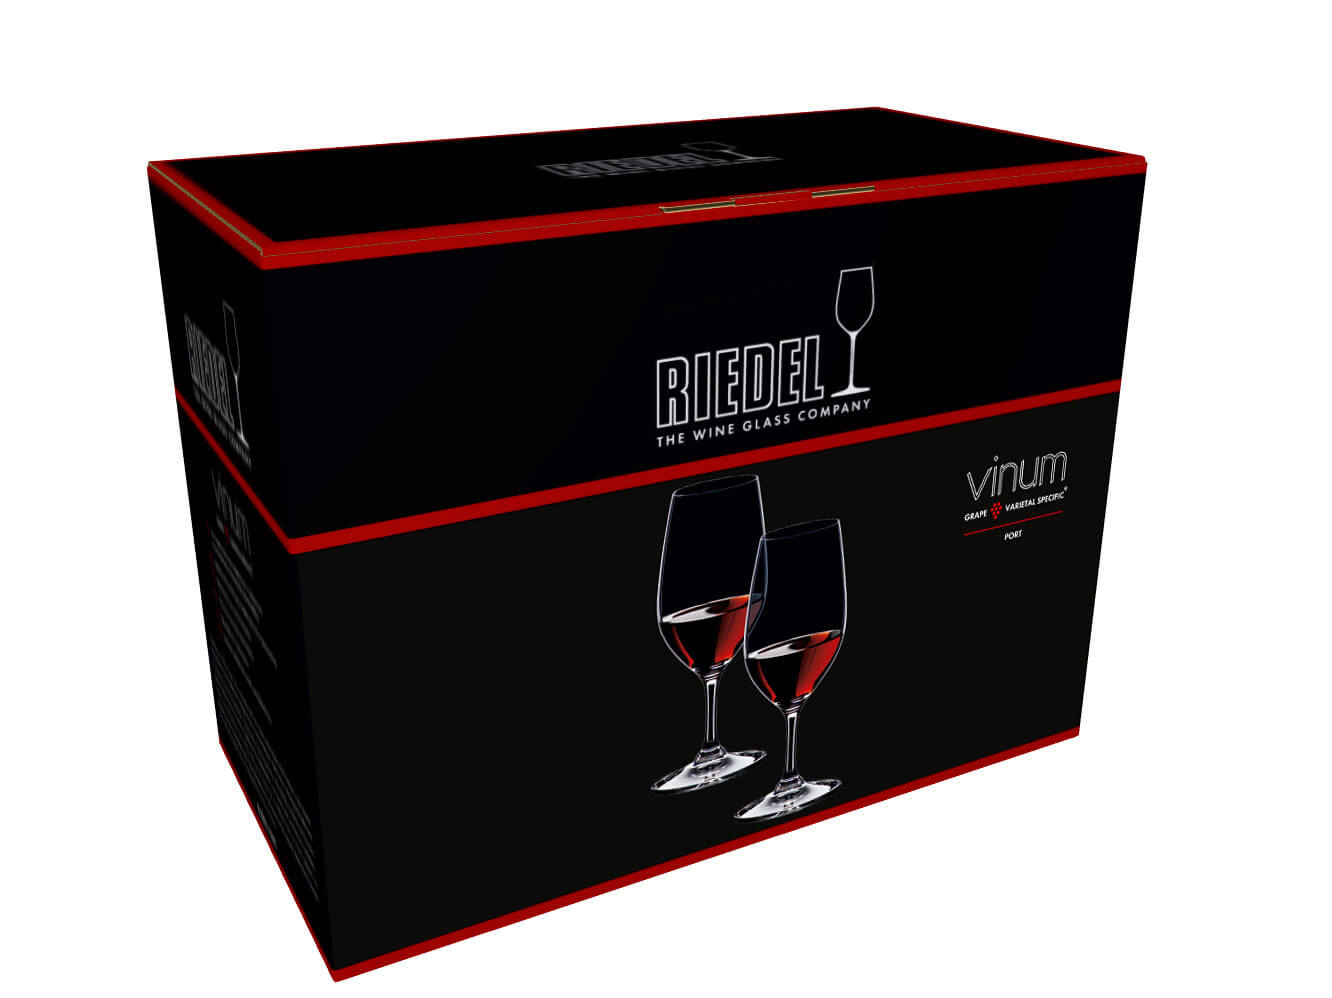 Port wine glass Vinum, Riedel - 240ml (2 pcs.)